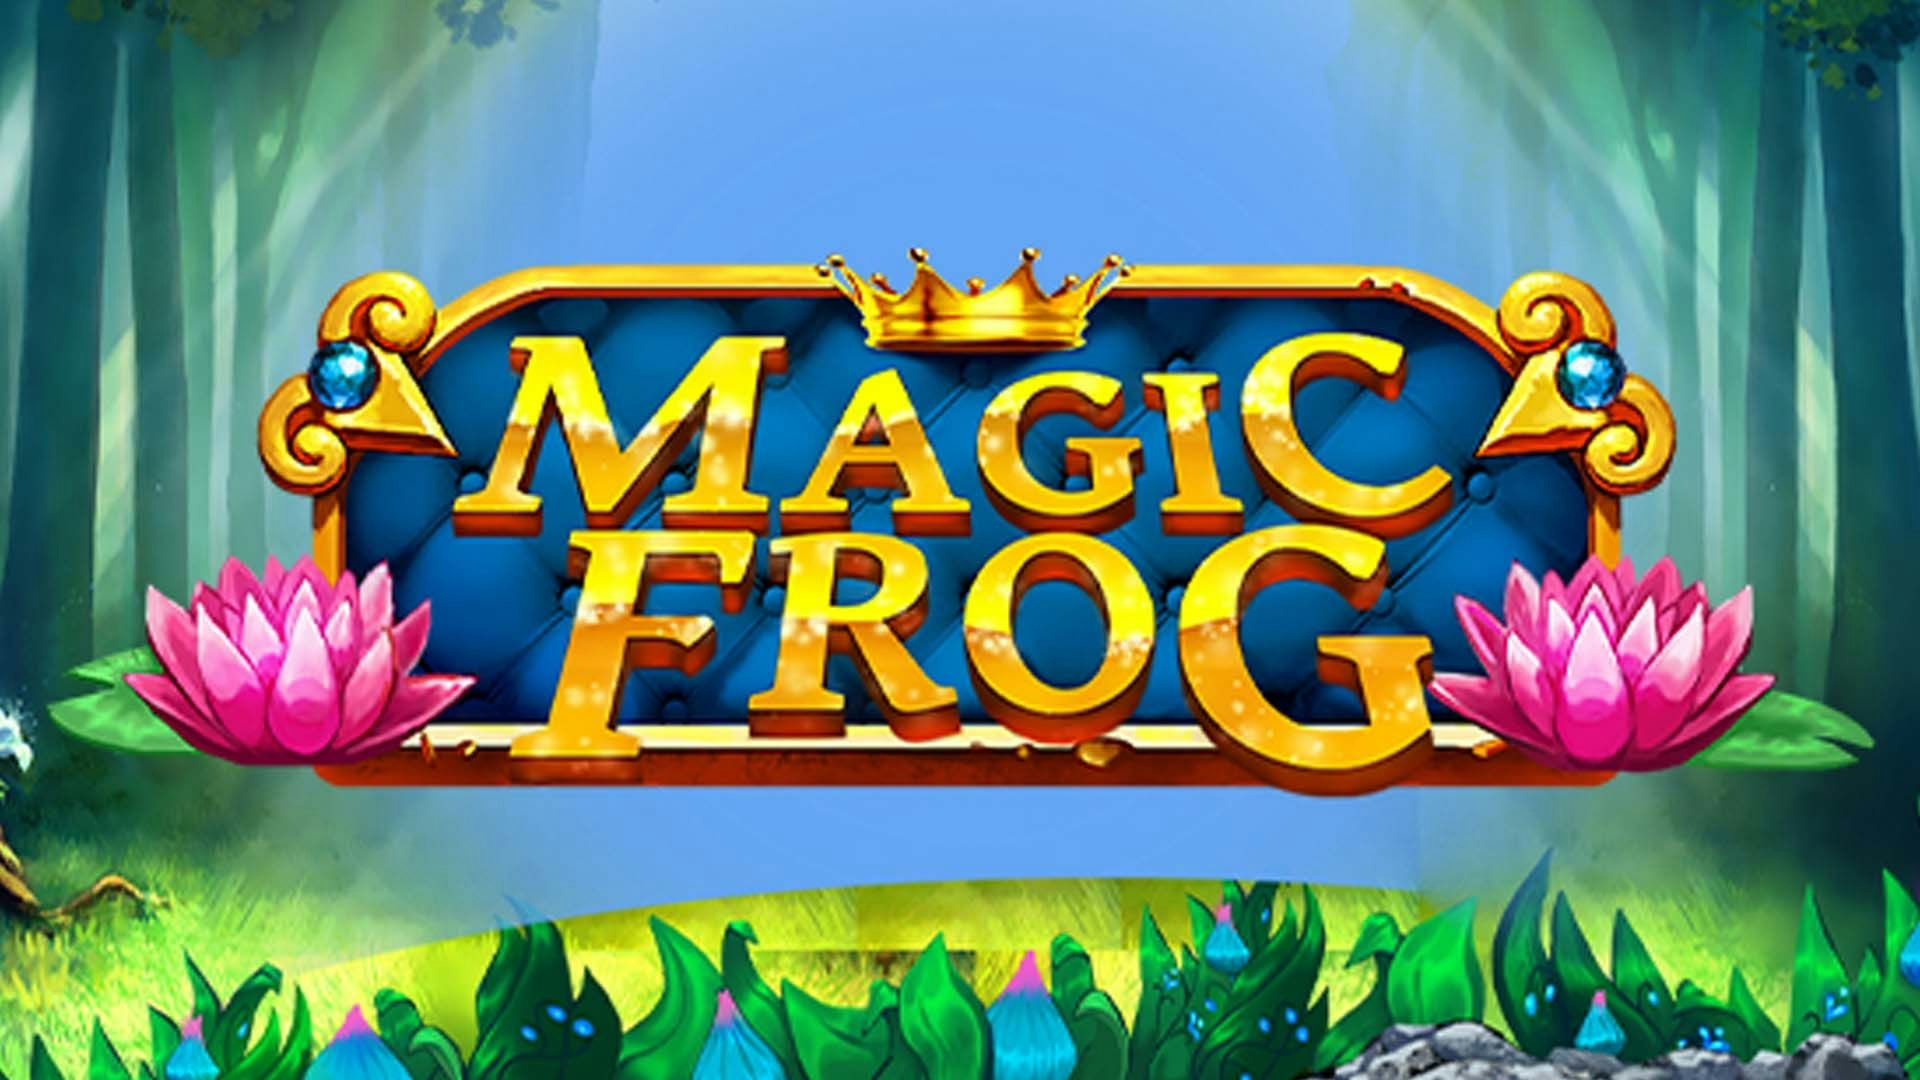 Magic Frog